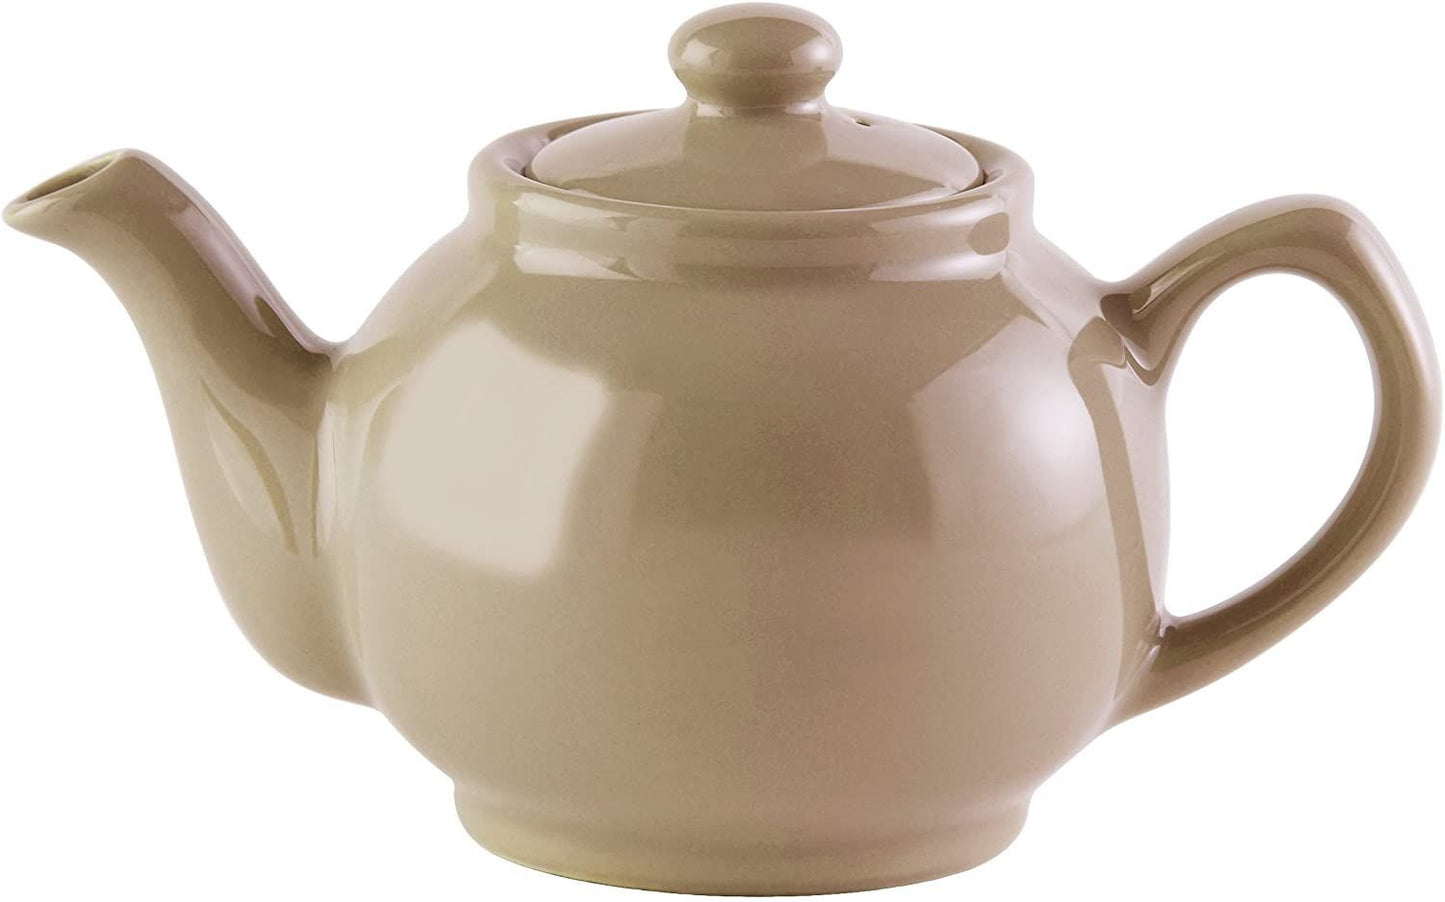 Kilner Price & Kensington Gloss Taupe 2 Cup Teapot